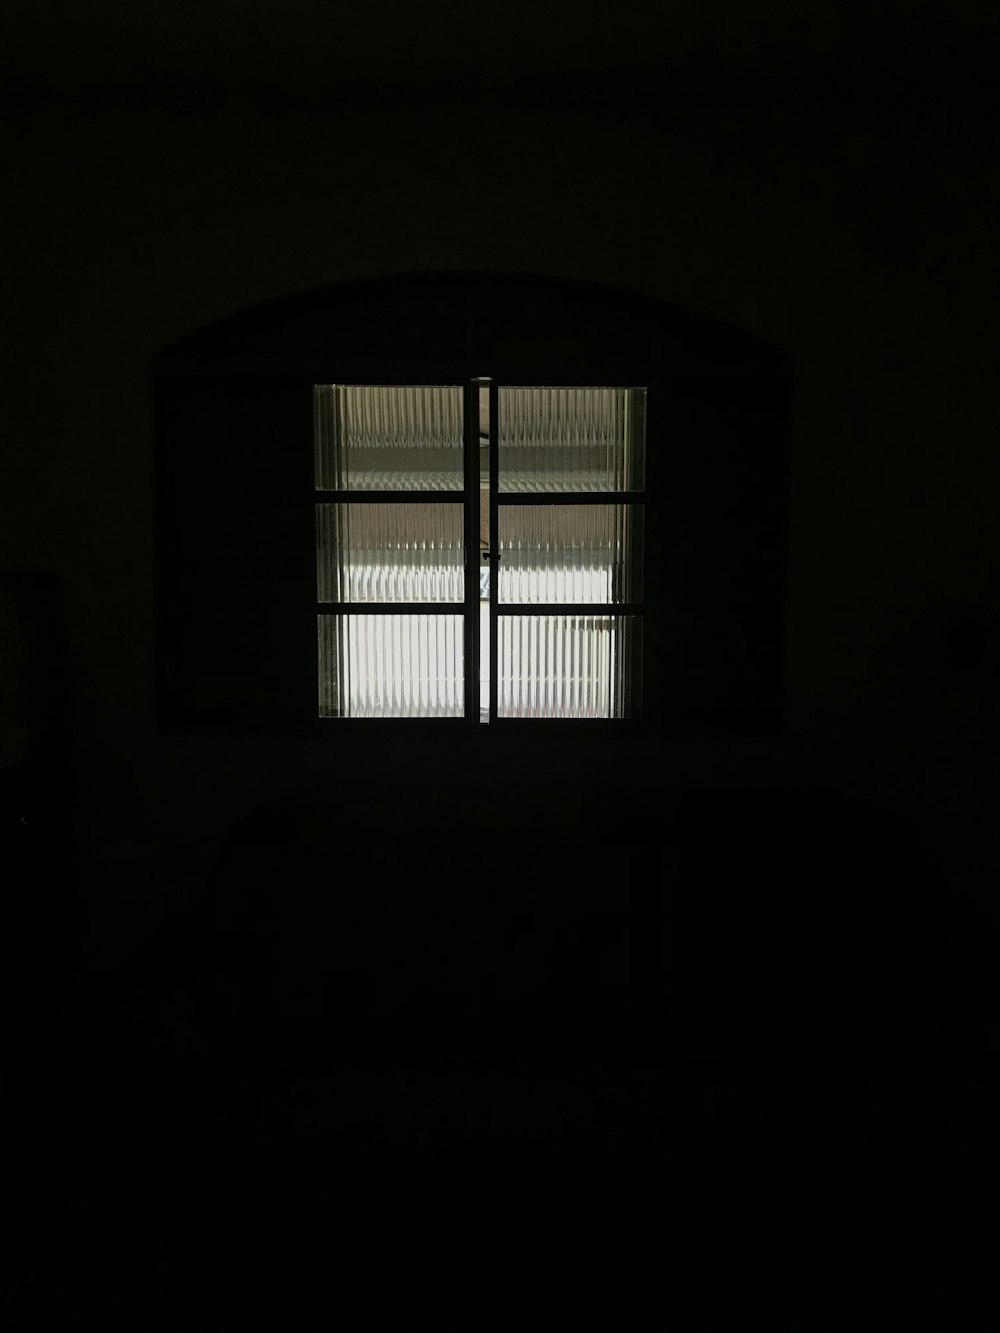 black framed glass window closed